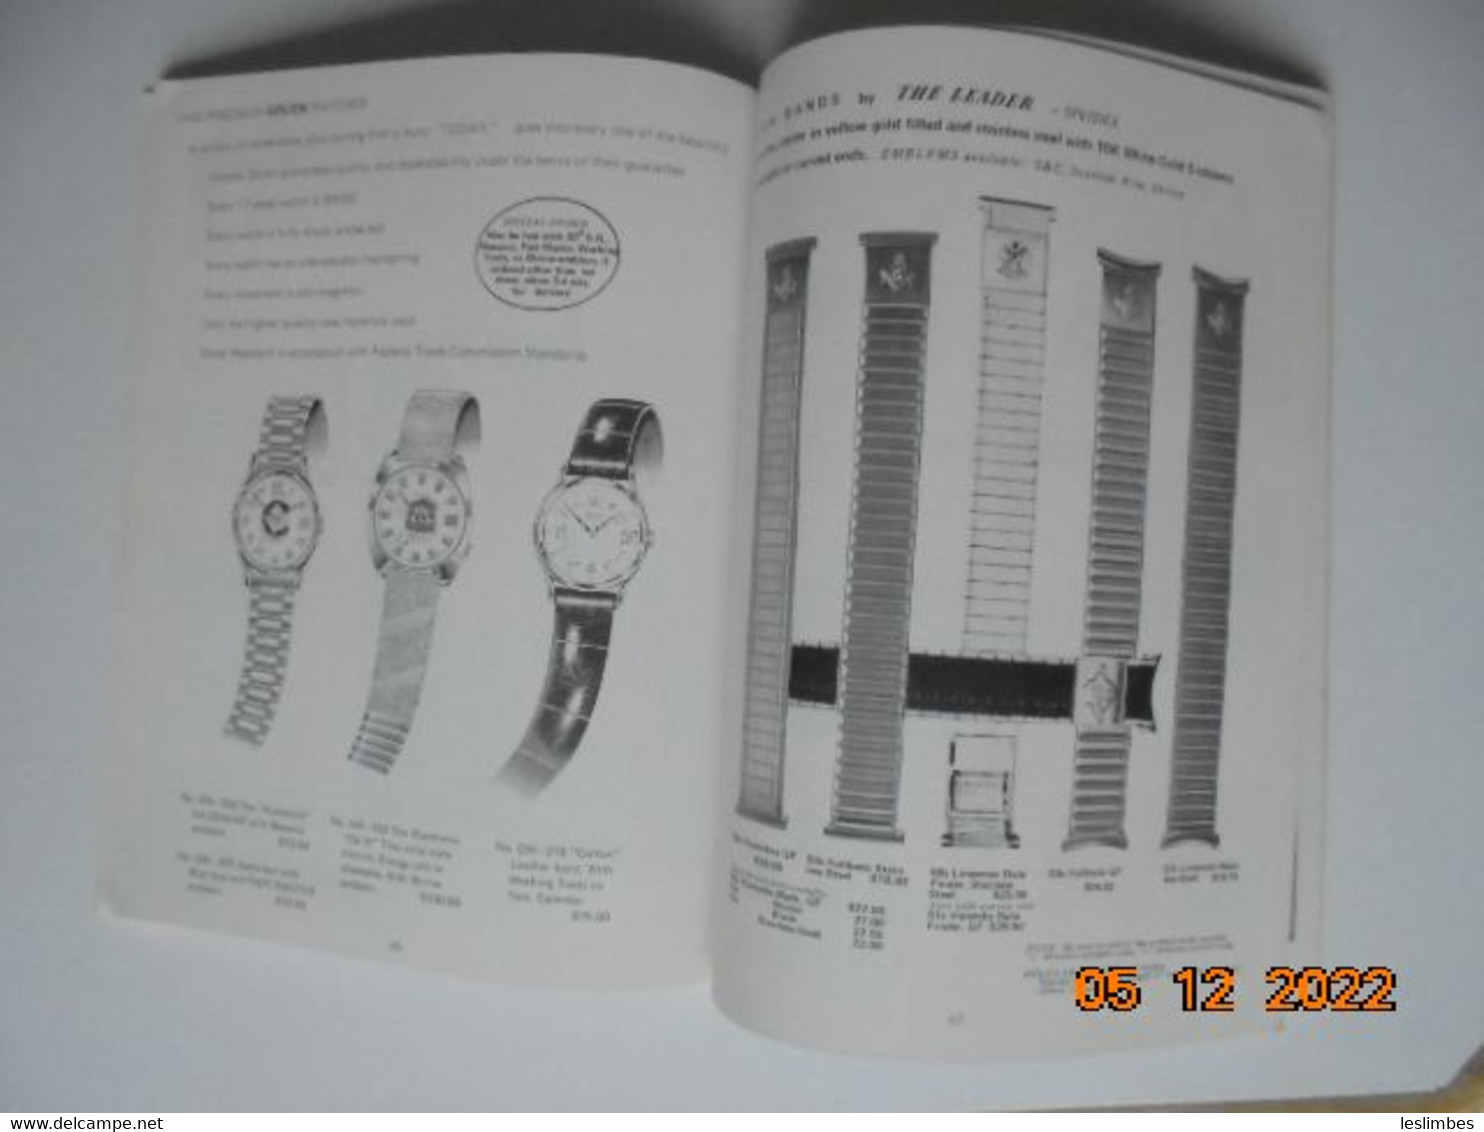 Macoy Publishing & Masonic Supply Company Catalog No.102 (1975): Regalia, Supplies, Jewelry, Bibles, Books, Gifts - 1950-Now